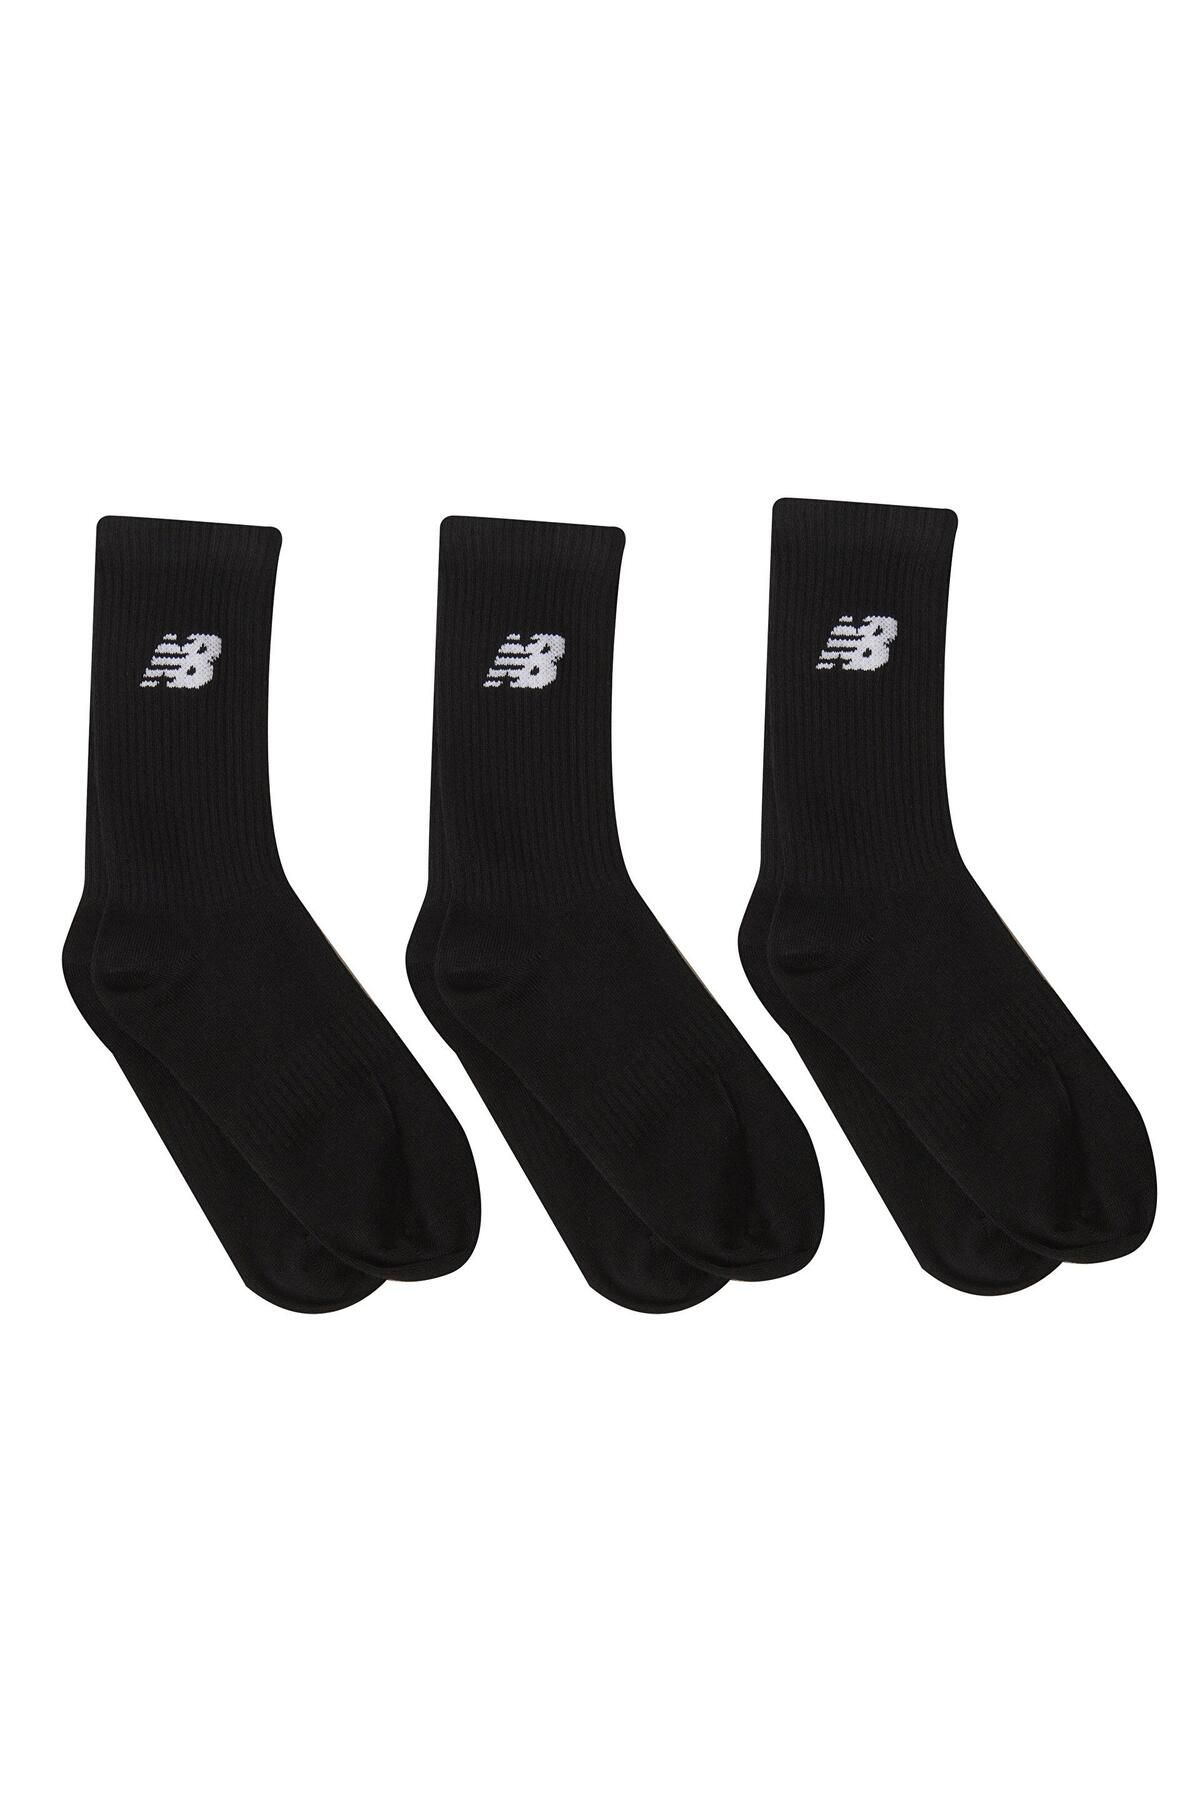 New Balance NB Lifestyle Socks Unisex Çorap